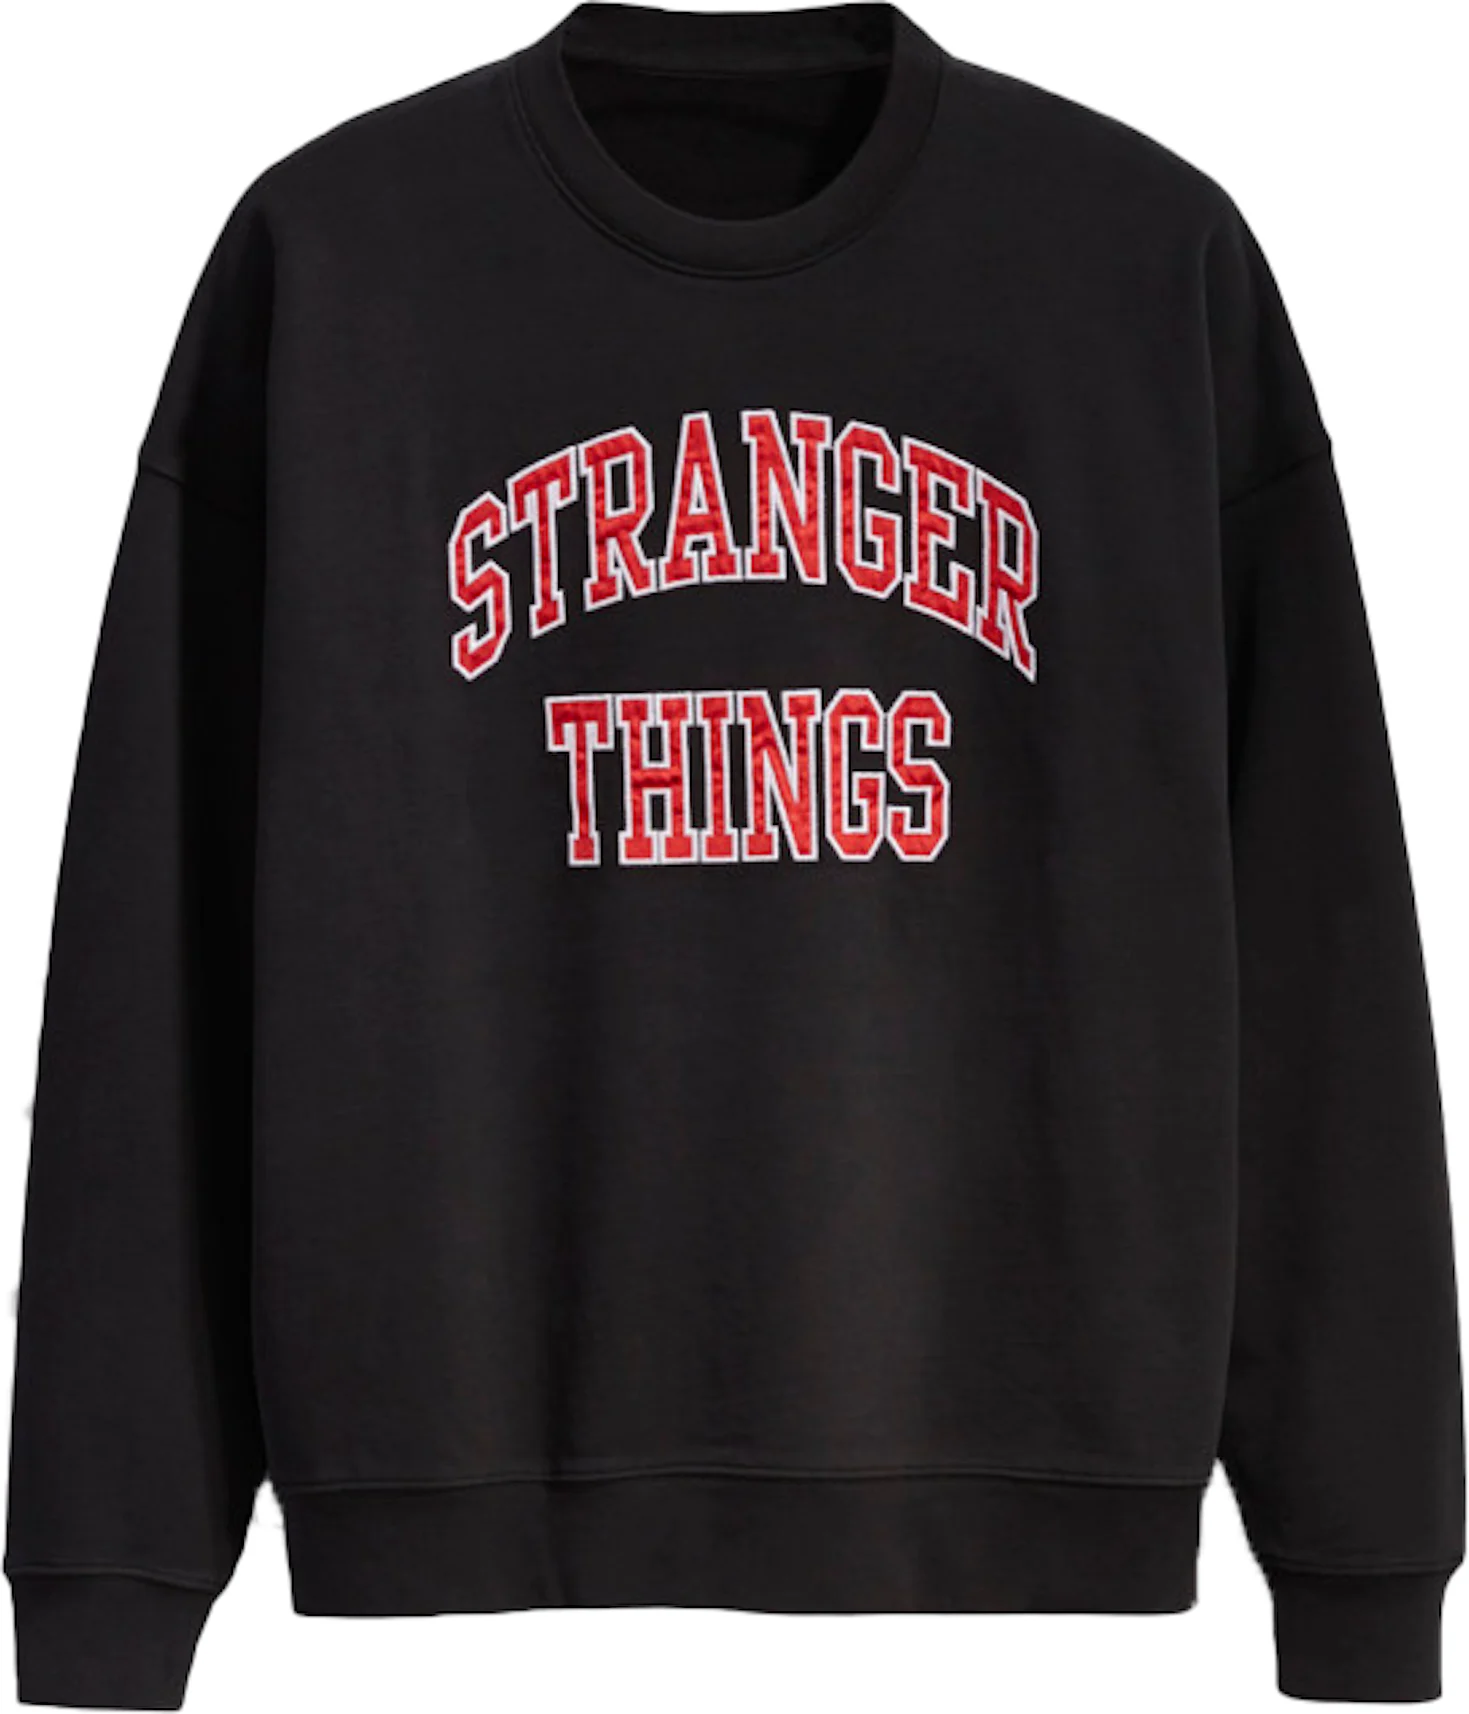 Levis x Stranger Things Hopper's Crewneck Sweatshirt Black Hombre 